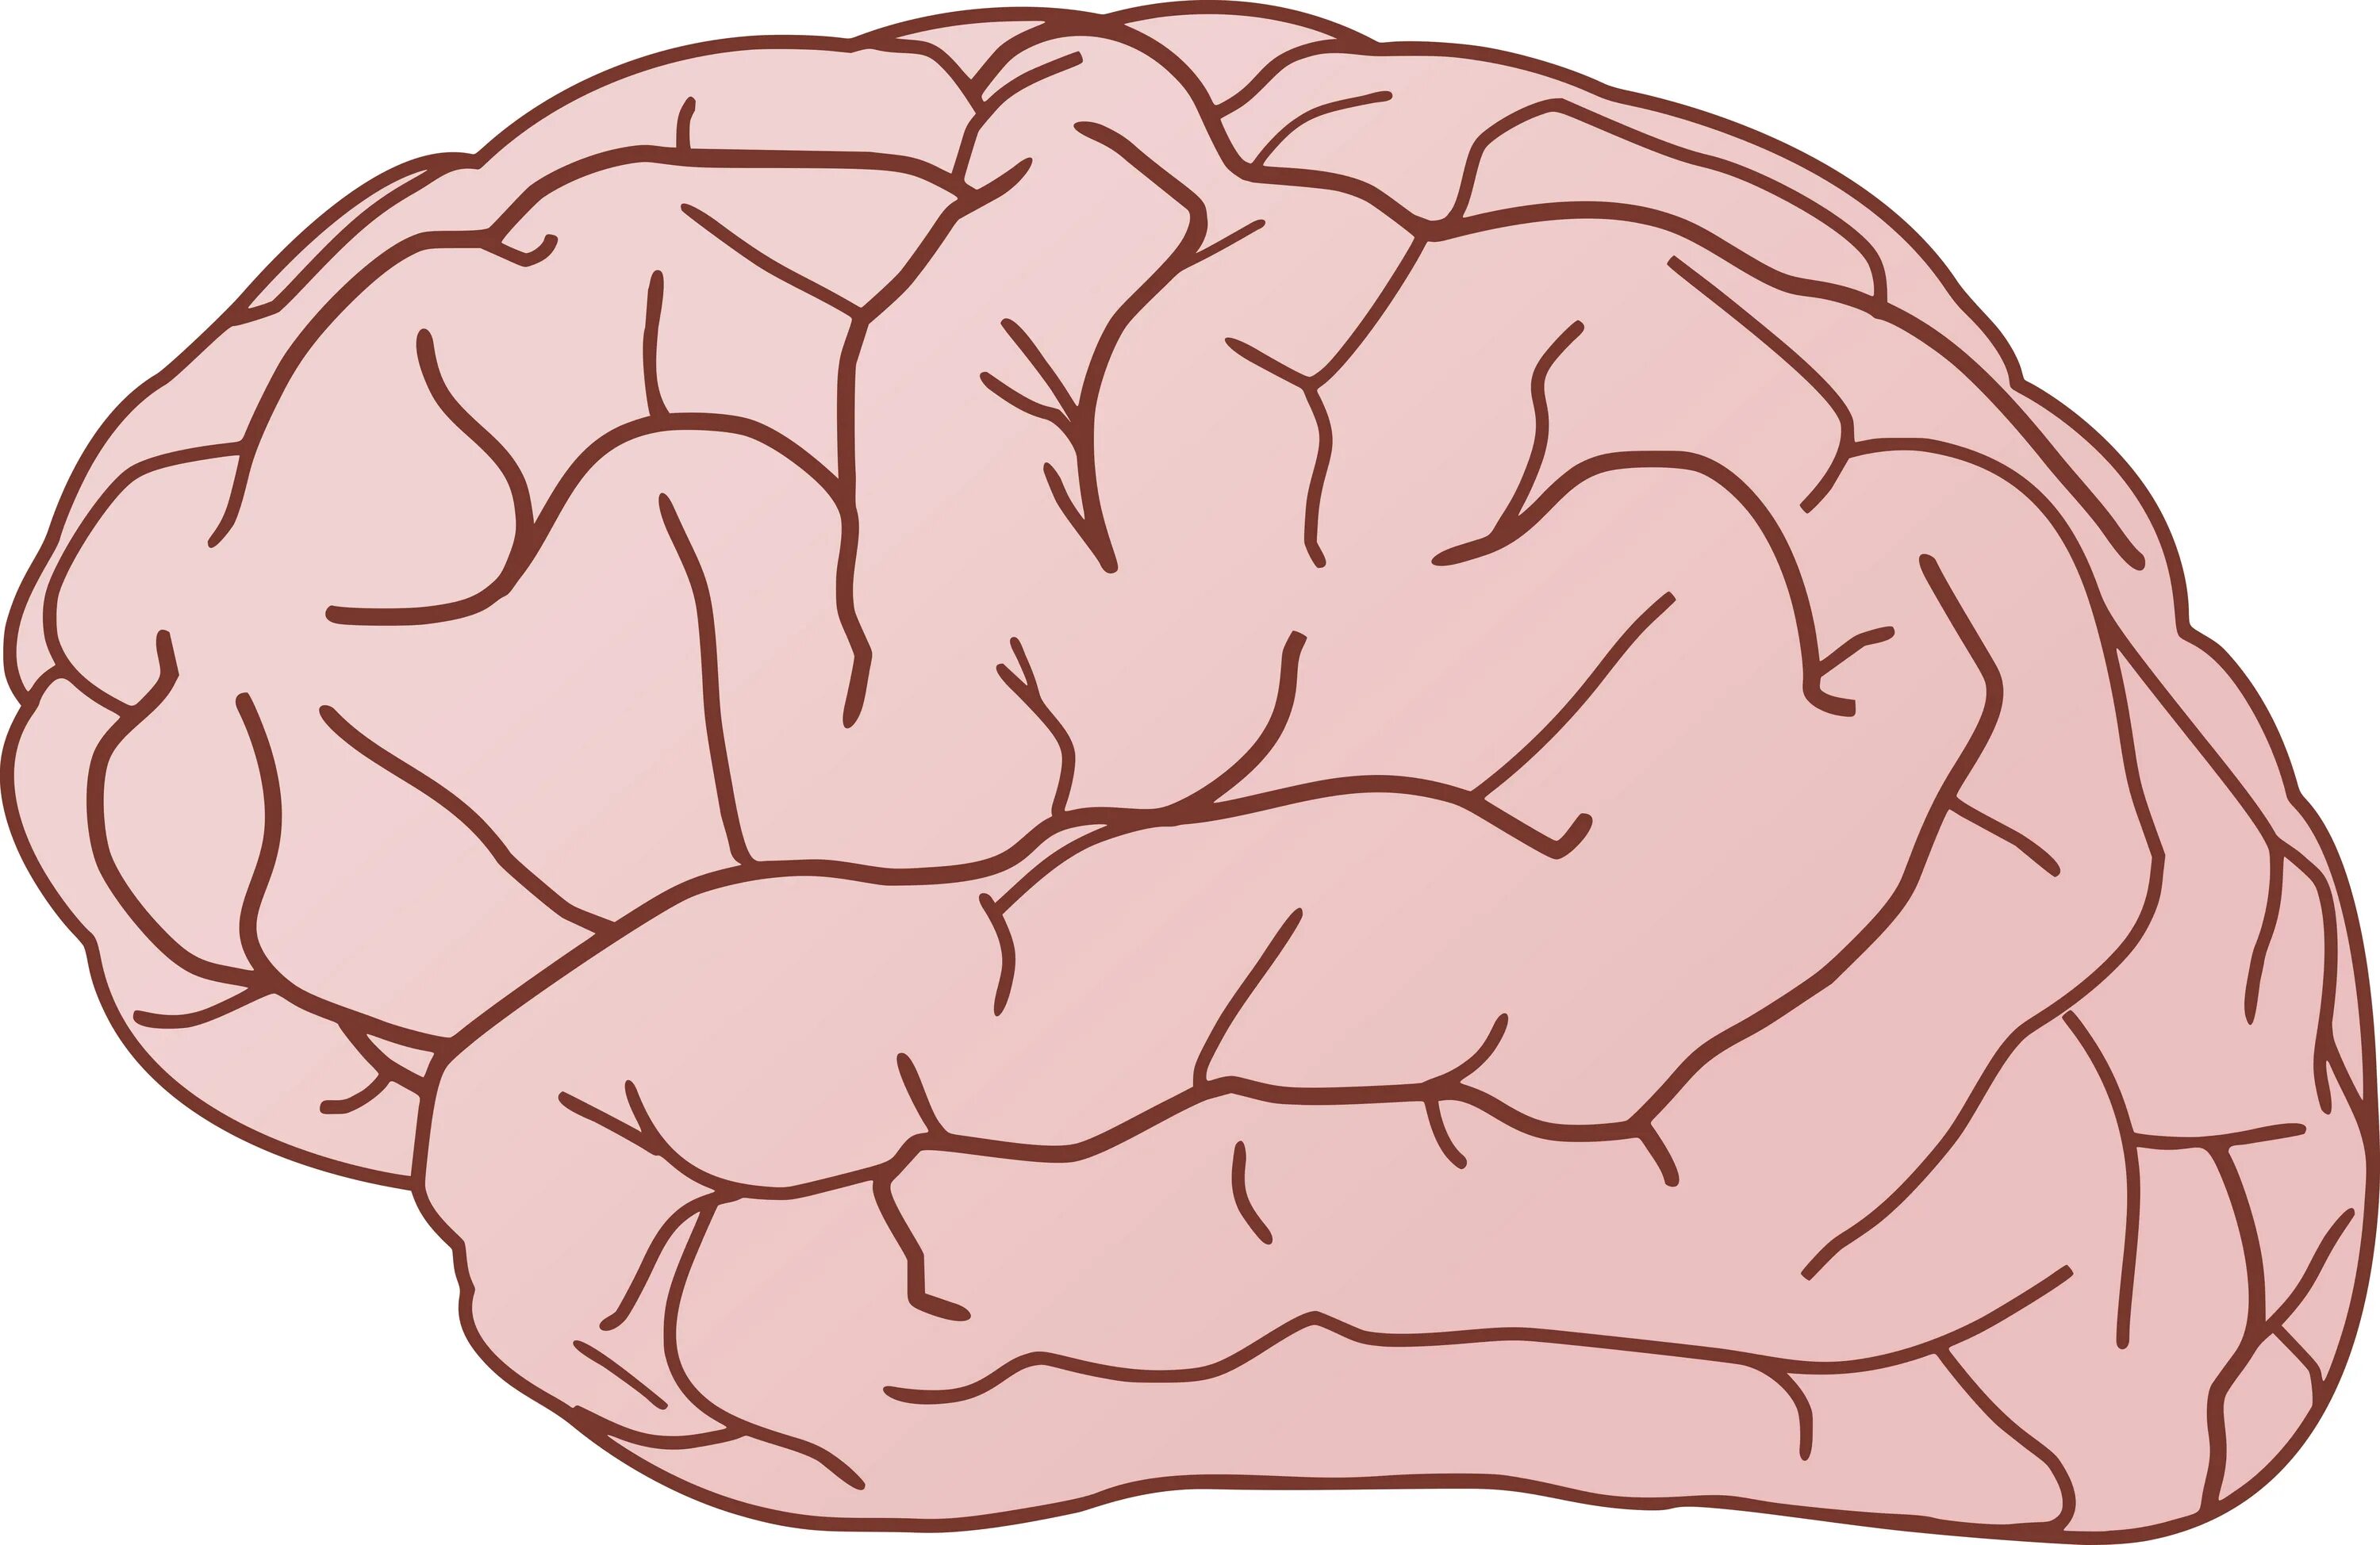 Brain download. Мозг нарисованный.